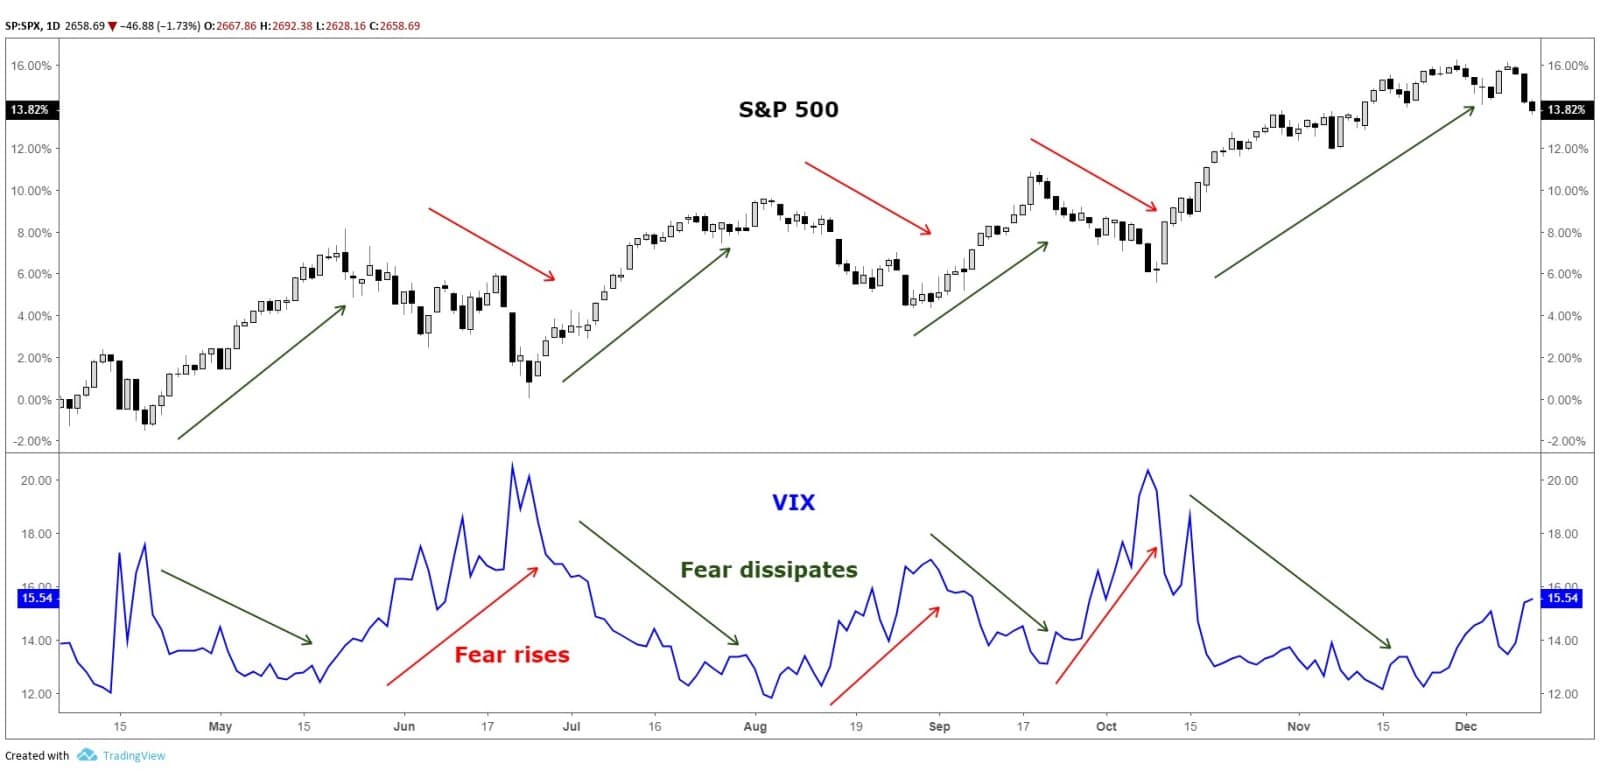 VIX vs. S&P 500